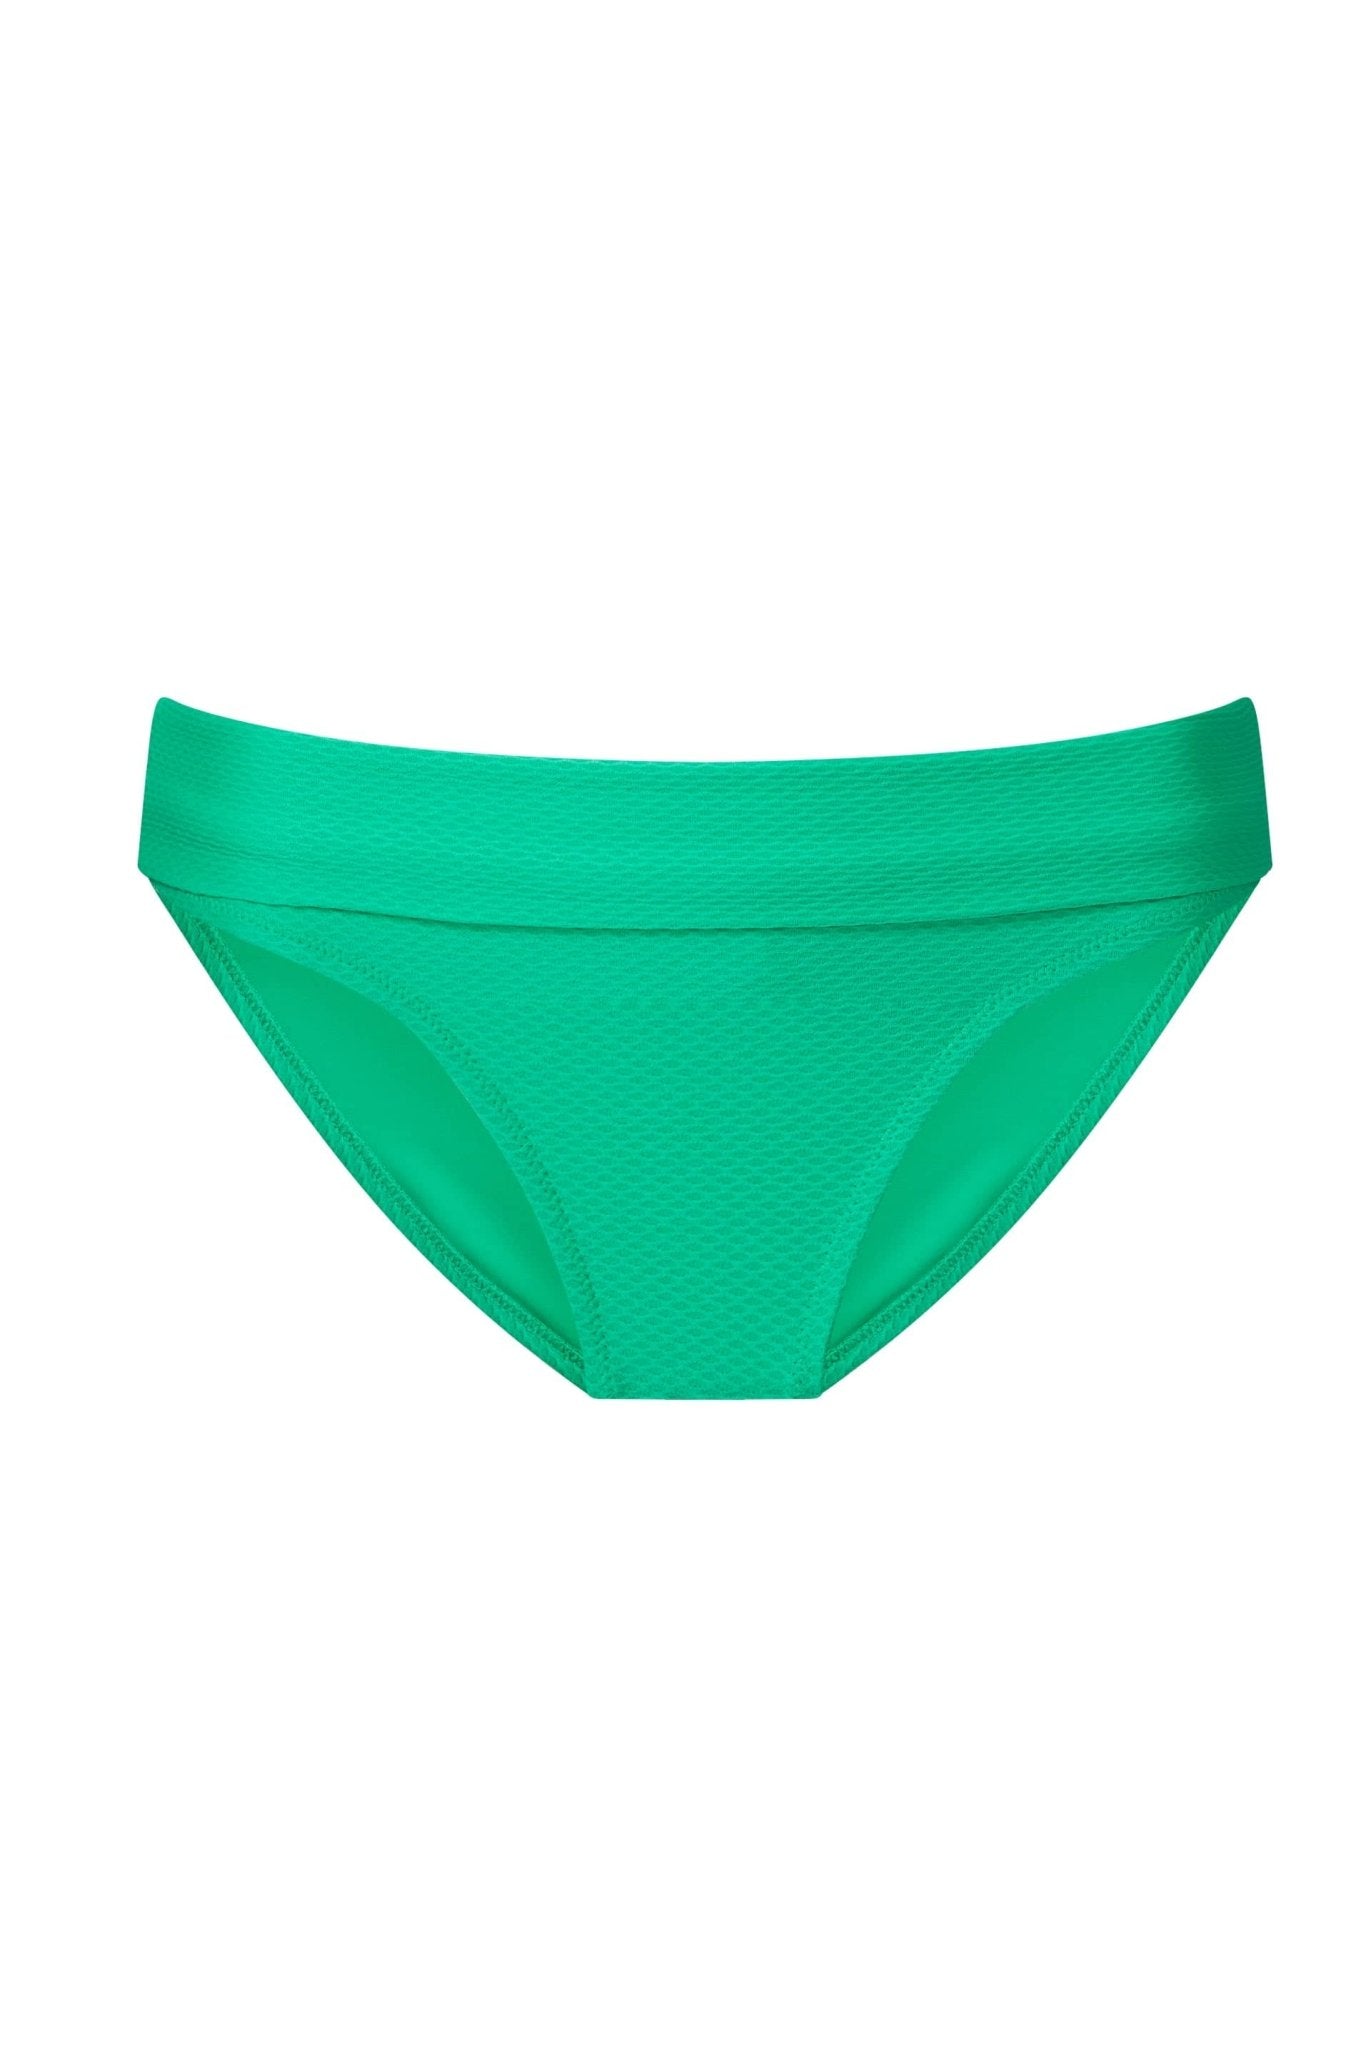 Core Fold Over Bikini Bottom in Jade - Heidi Klein - UK Store